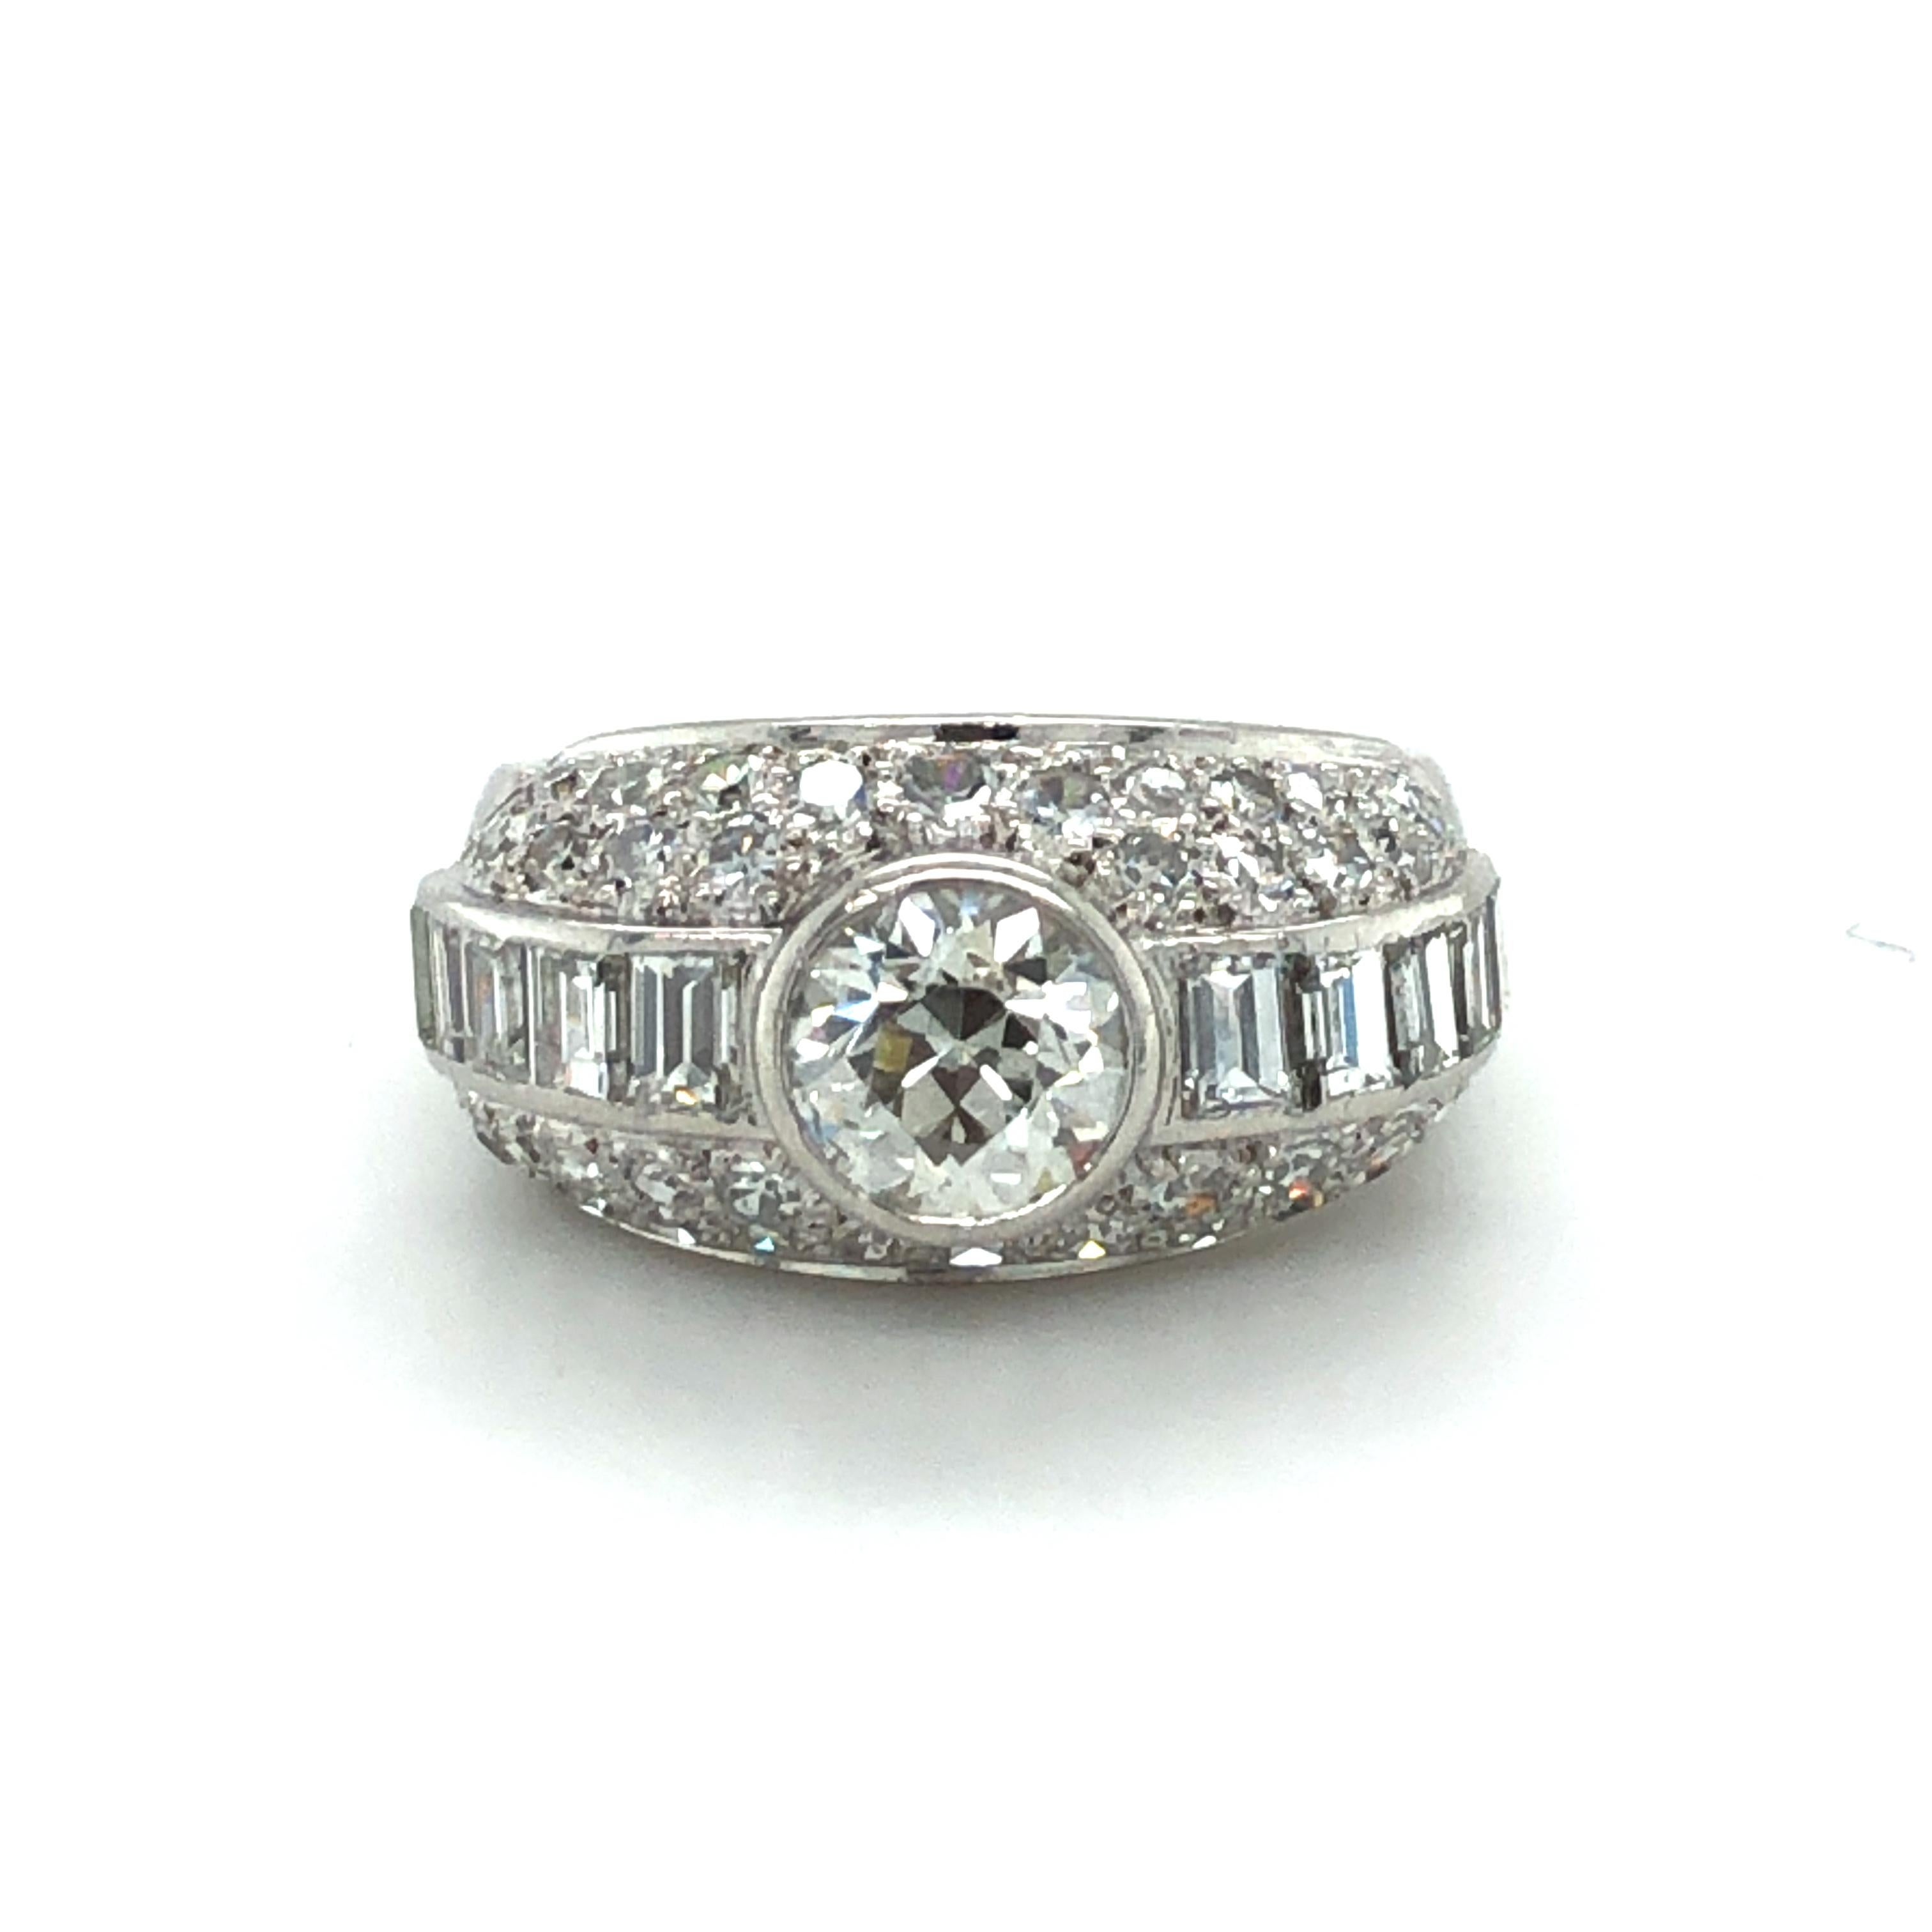 Old European Cut Art Deco Style Diamond Ring in Platinum 950